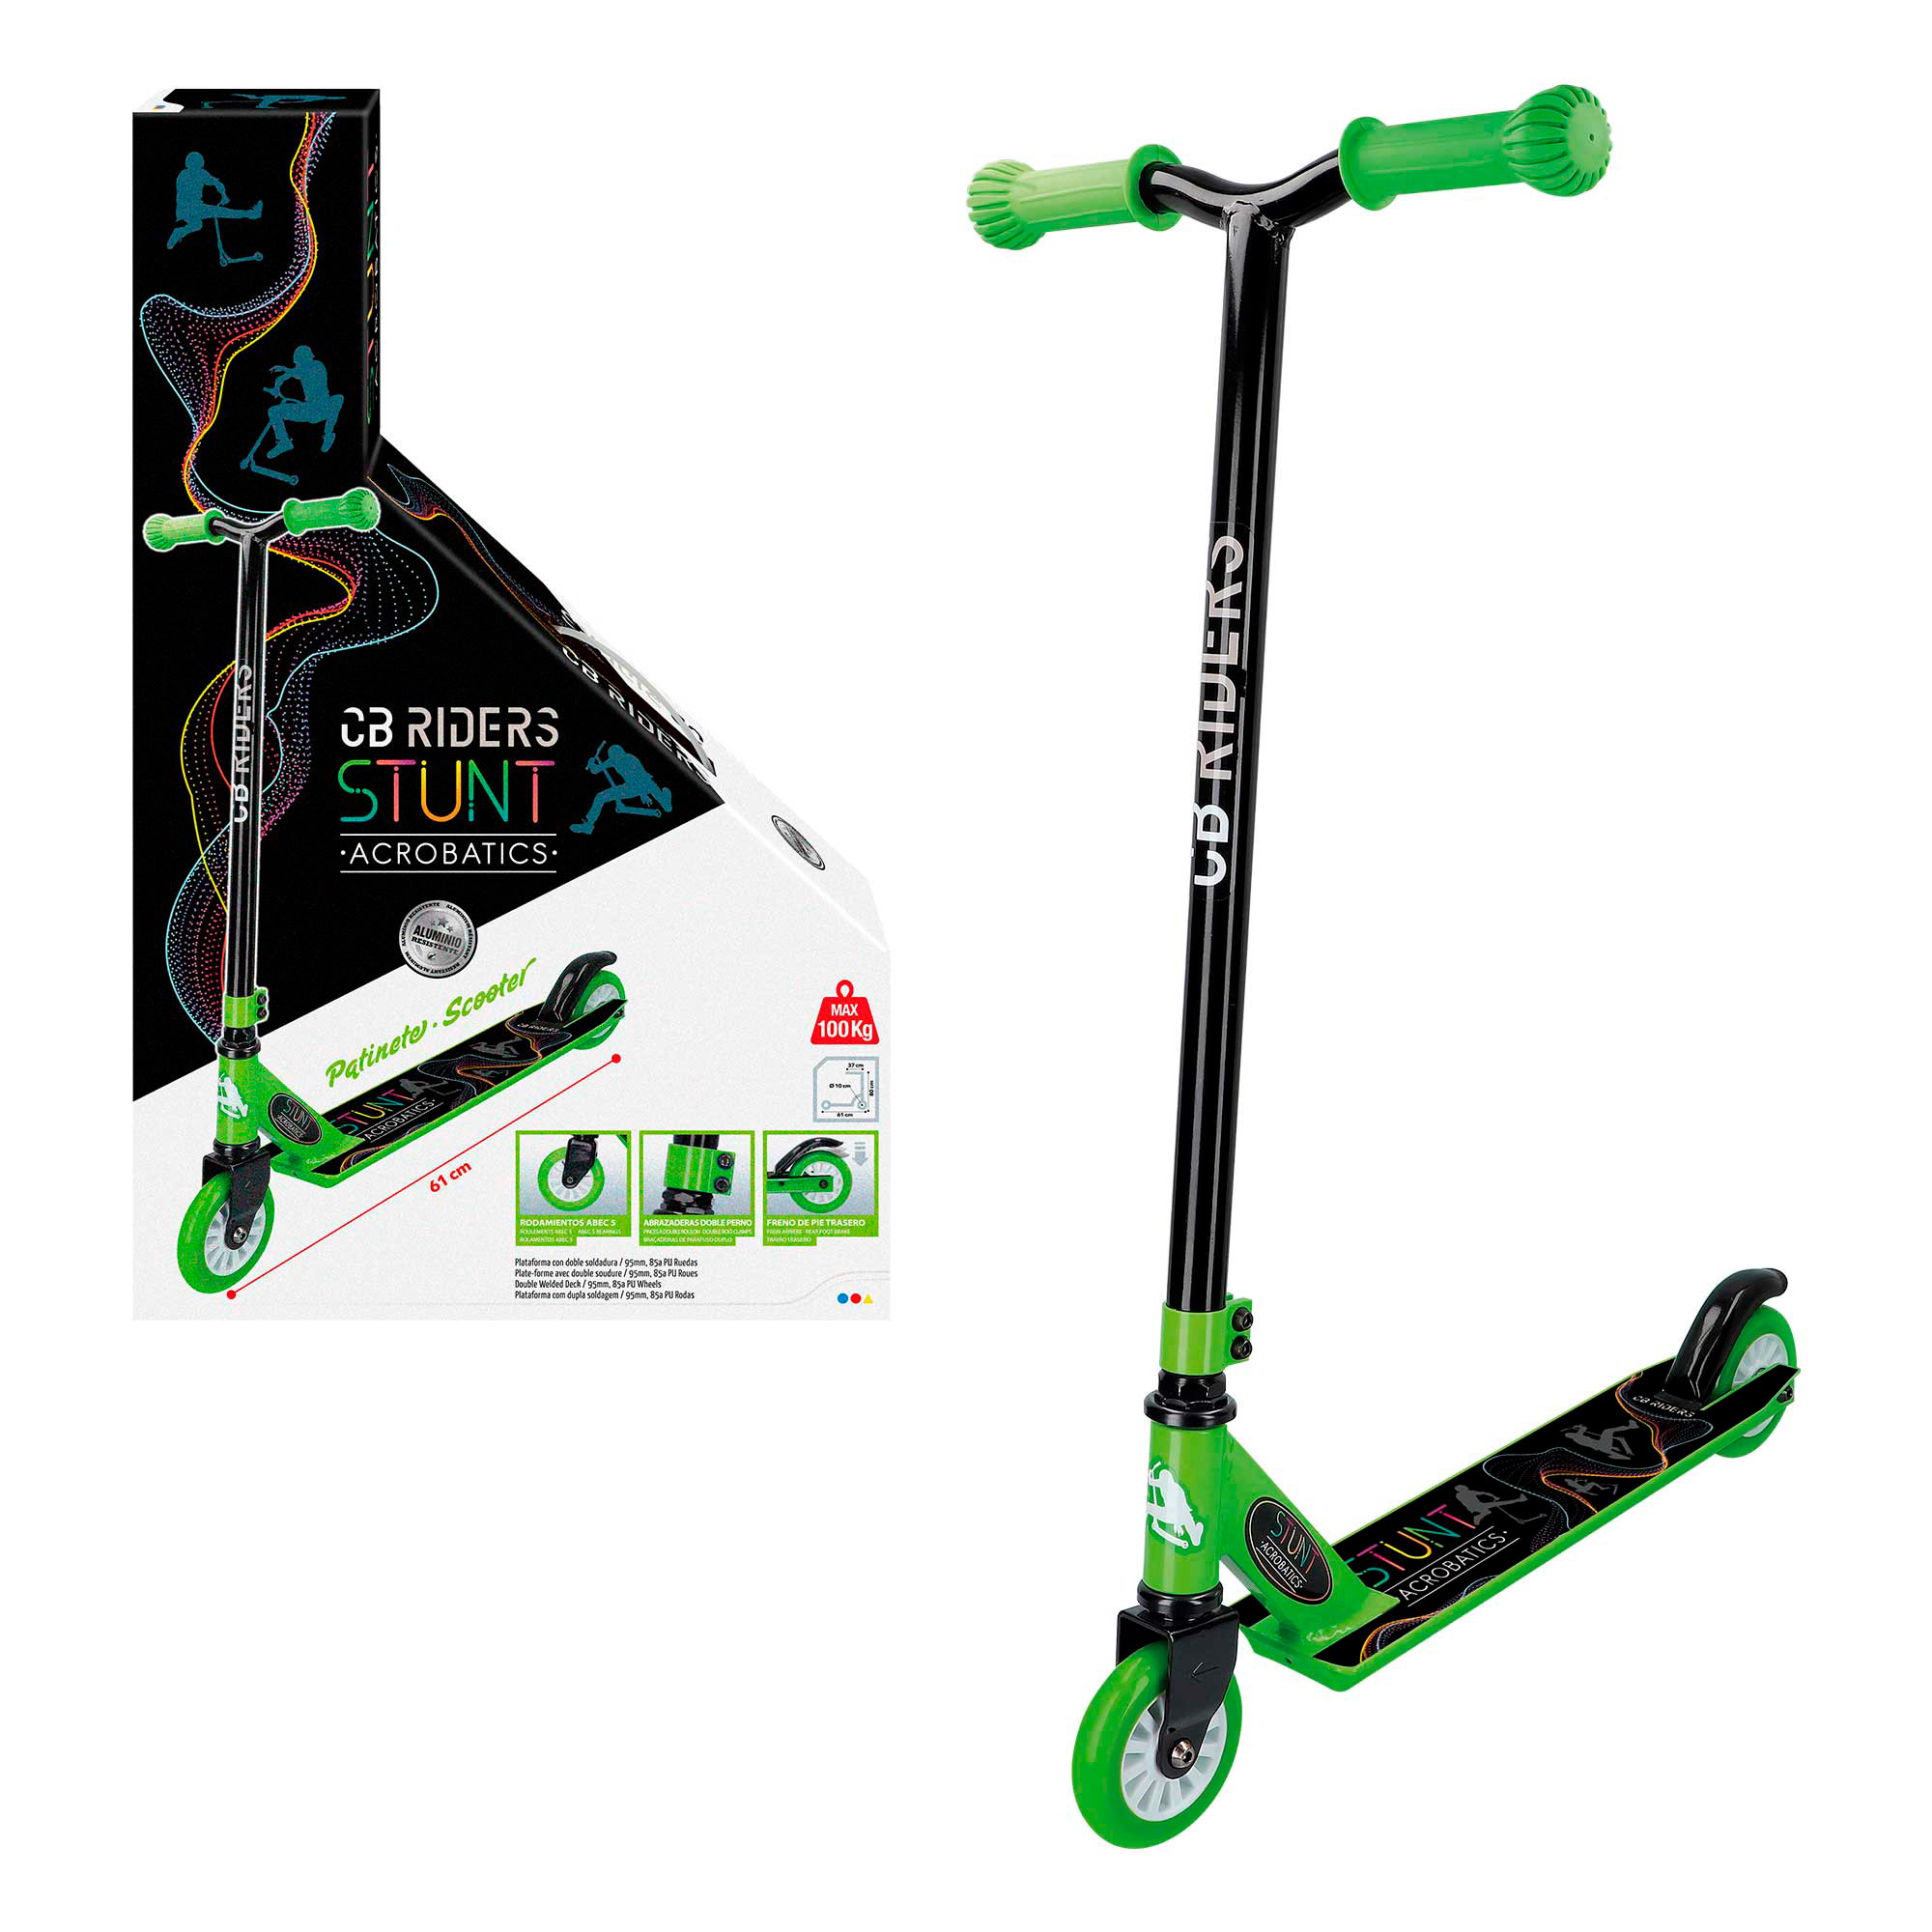 Cb Toys - Patinete 2 ruedas acrobático verde CB Riders